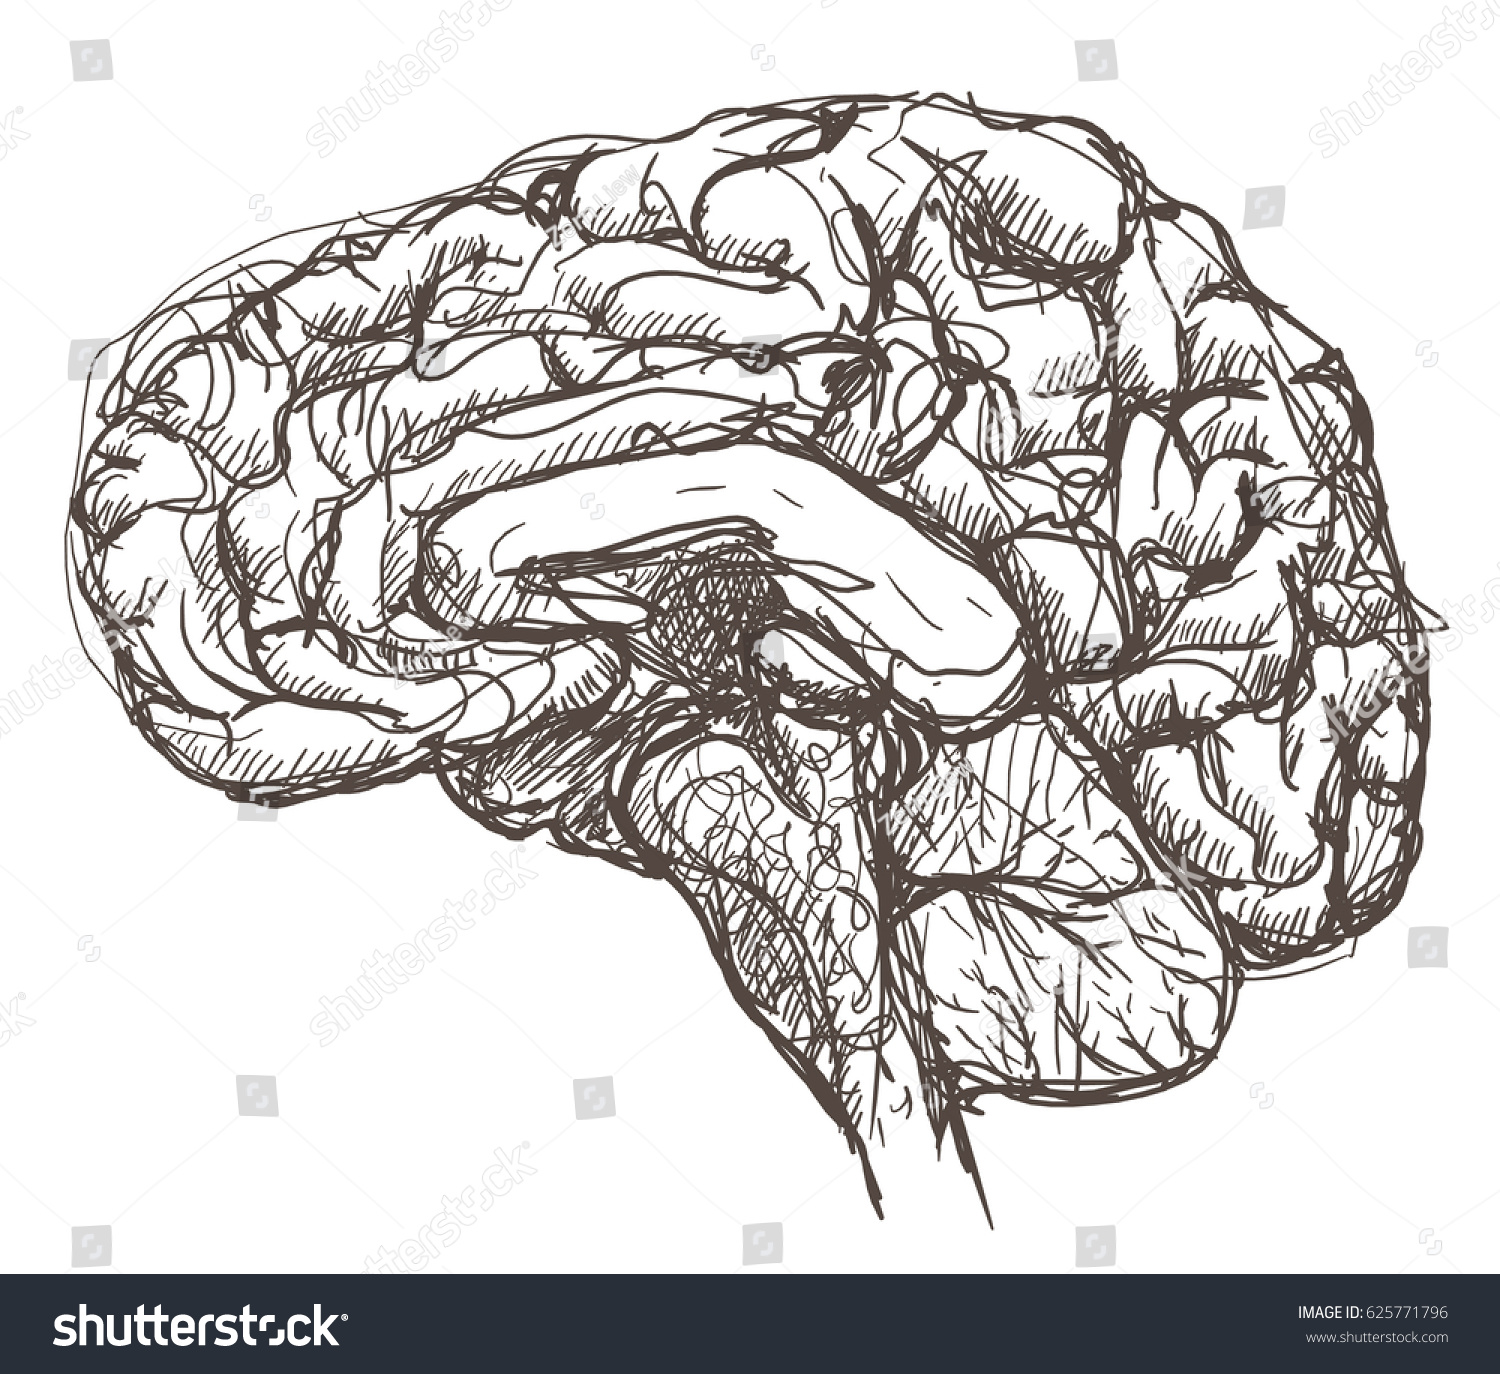 Pen Sketch Human Brain Shown Cross Vector de stock625771796: Shutterstock